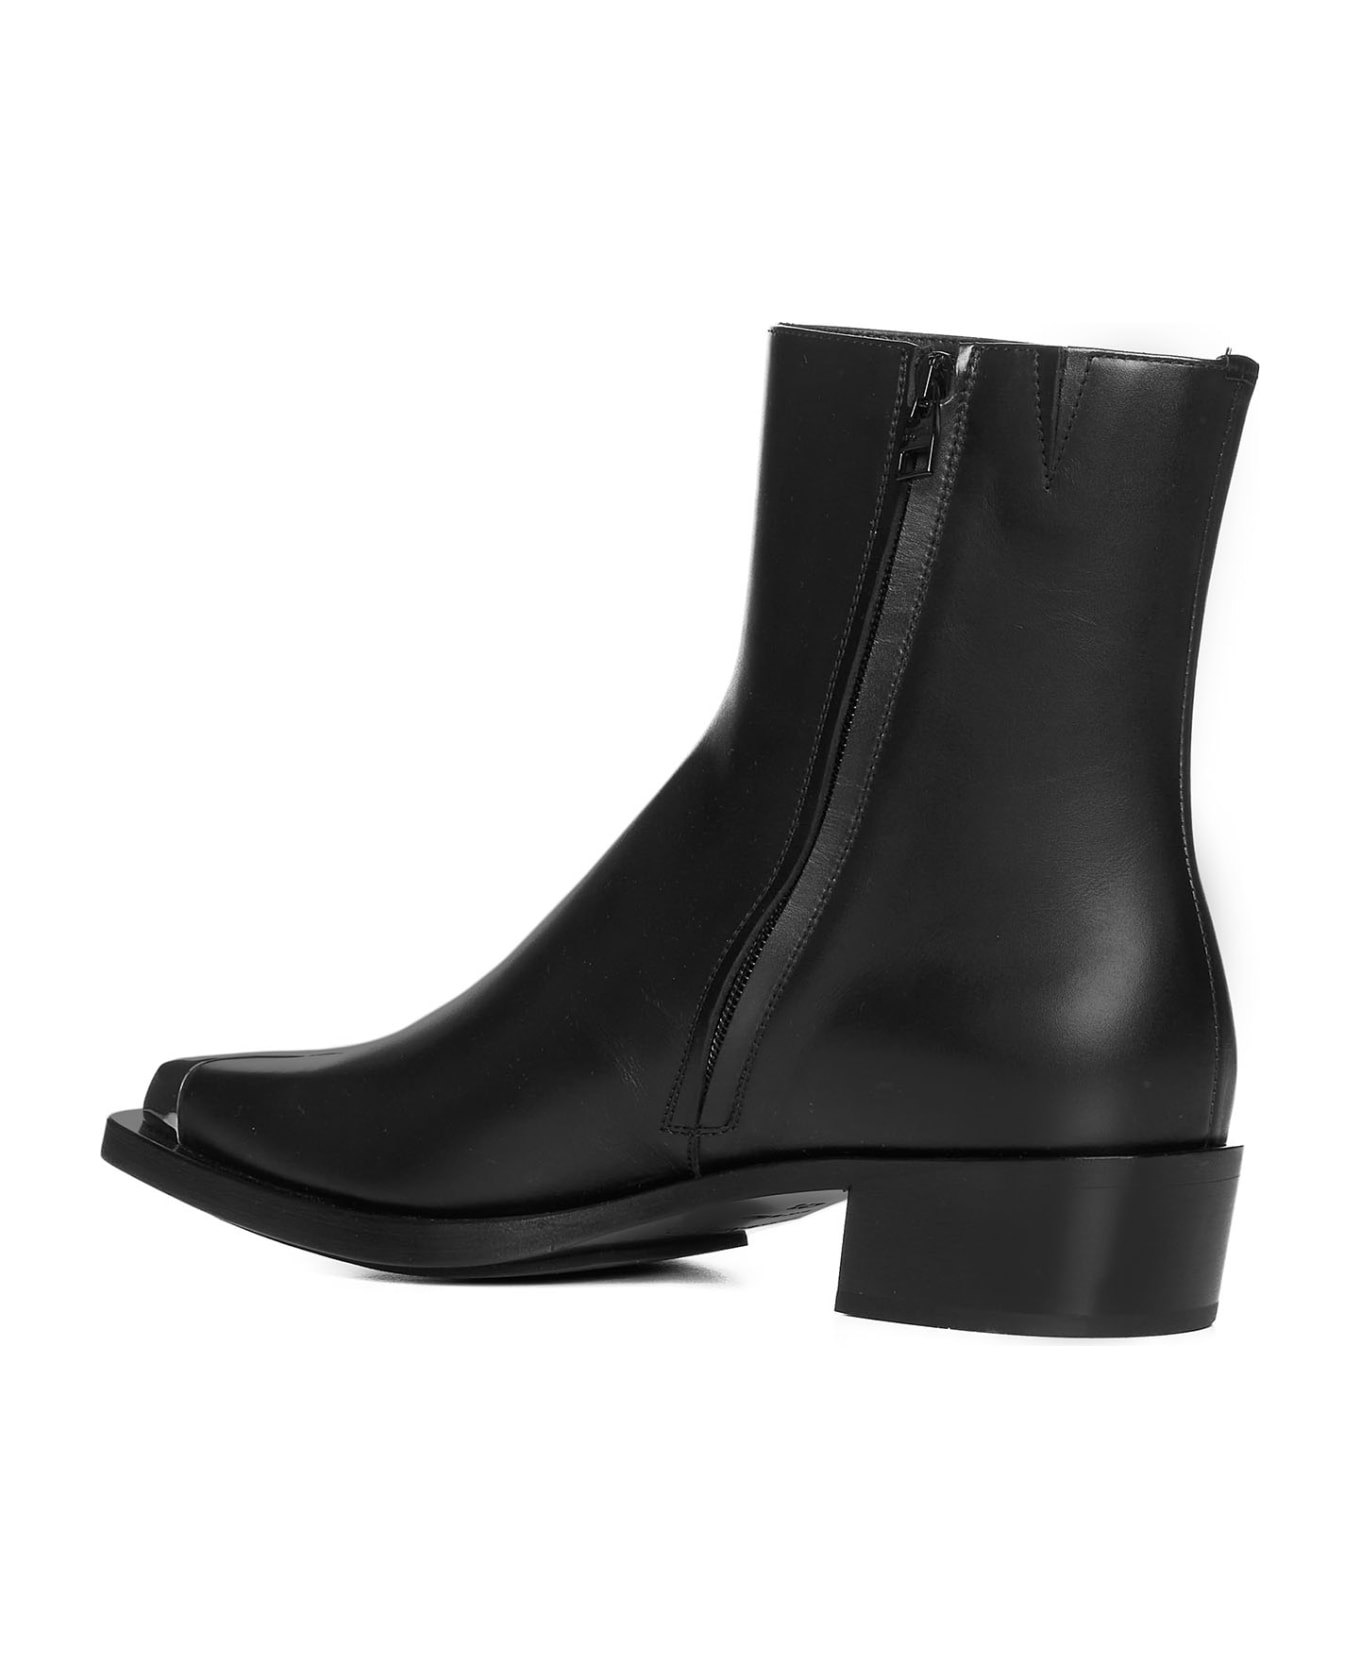 Alexander McQueen Metal Toe Side Zipped Boots - Nero argento